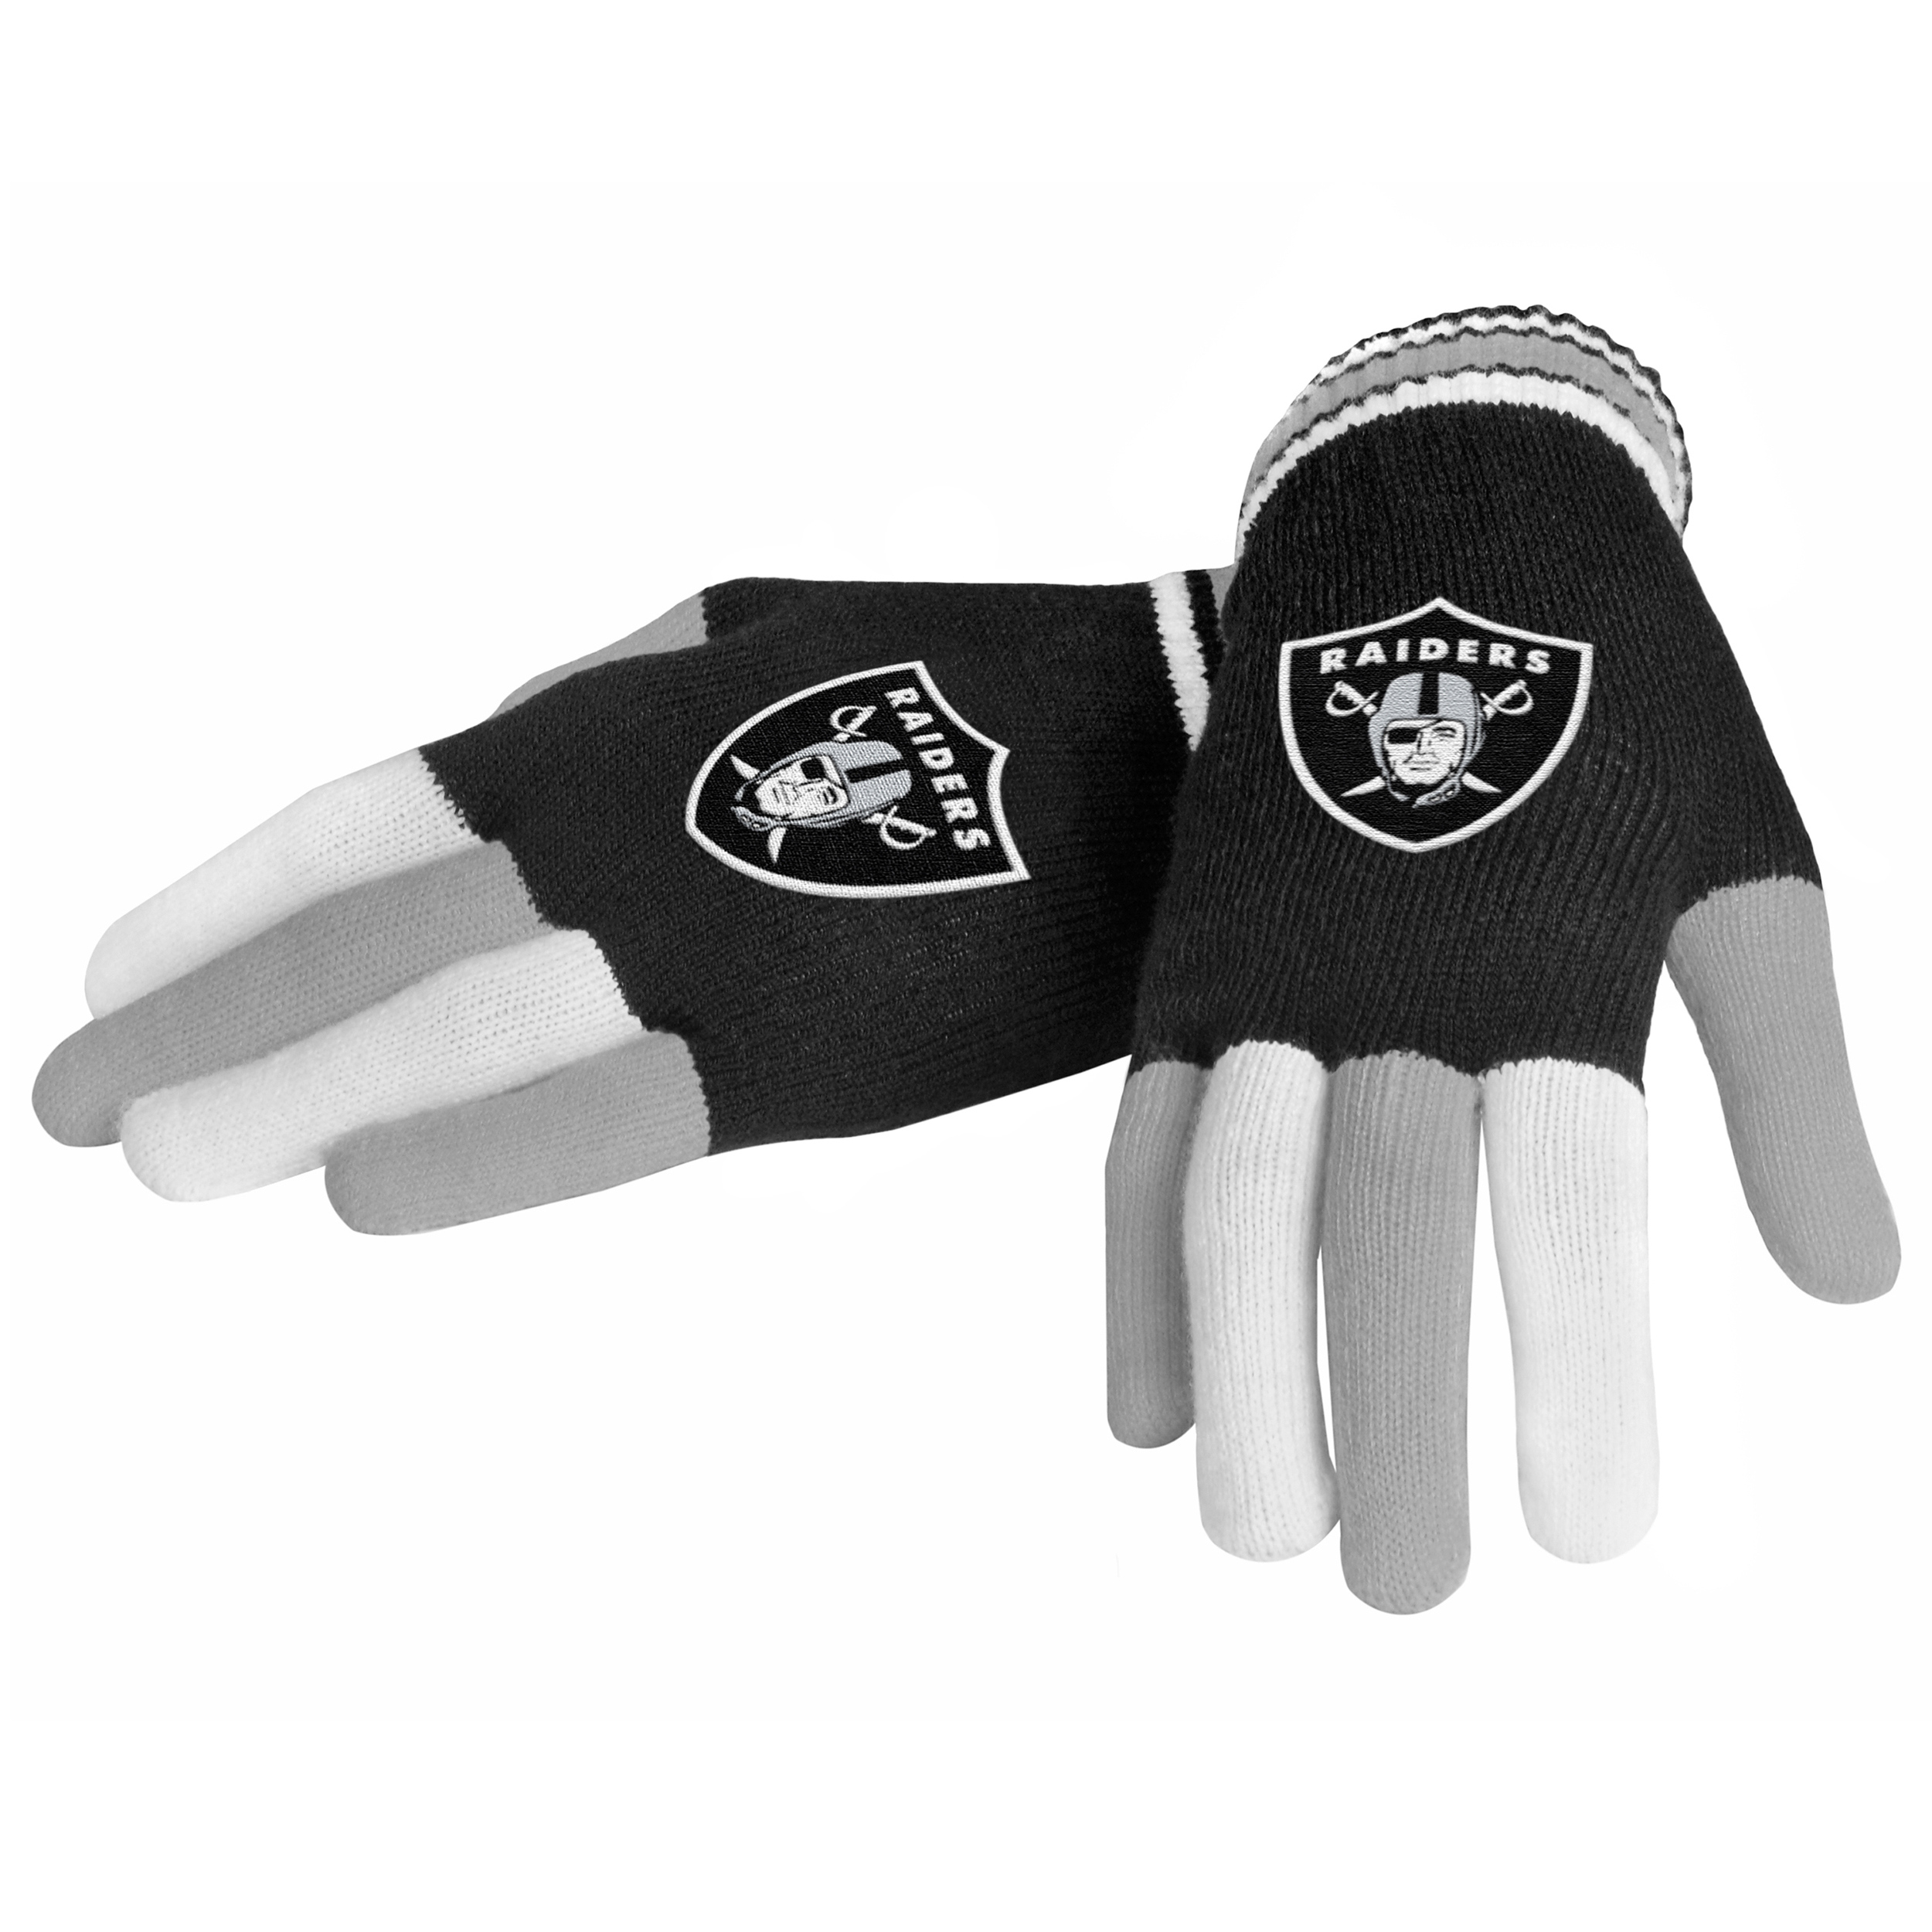 Las Vegas Raiders Knit Glove- Multi Color (#75188 / 6 pack) - Turnovers,  Inc.